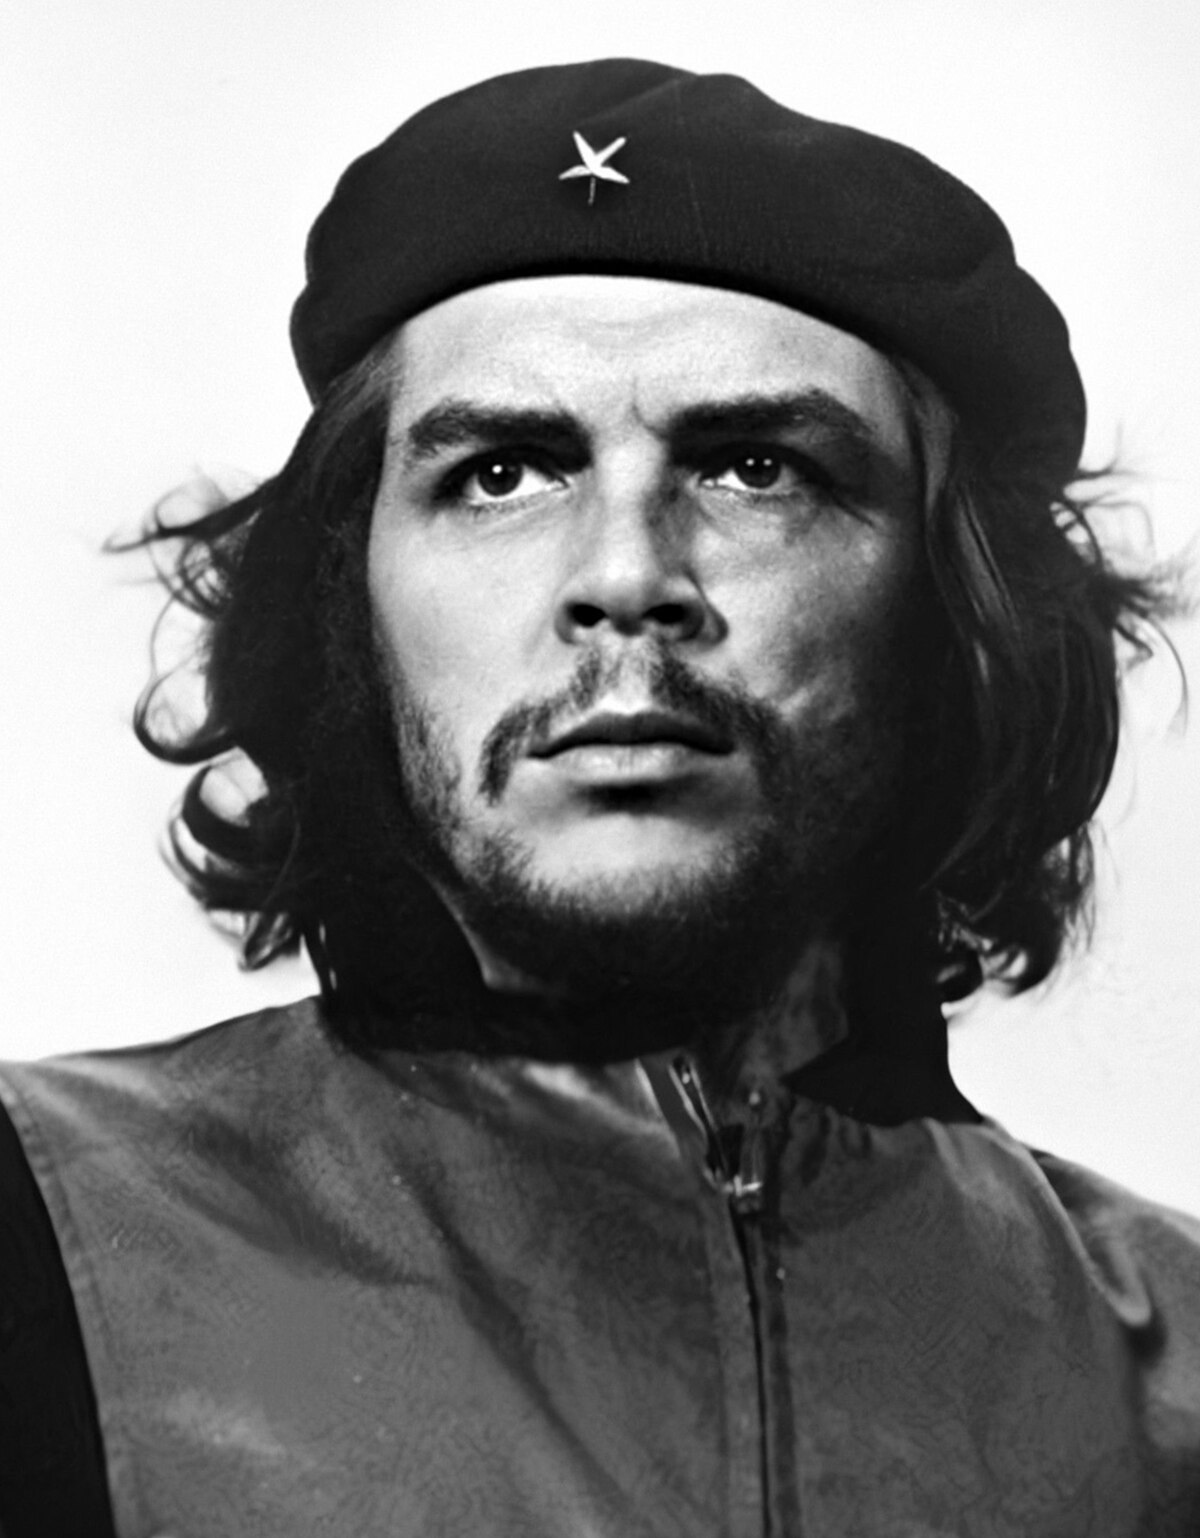 Viva Che Guevara